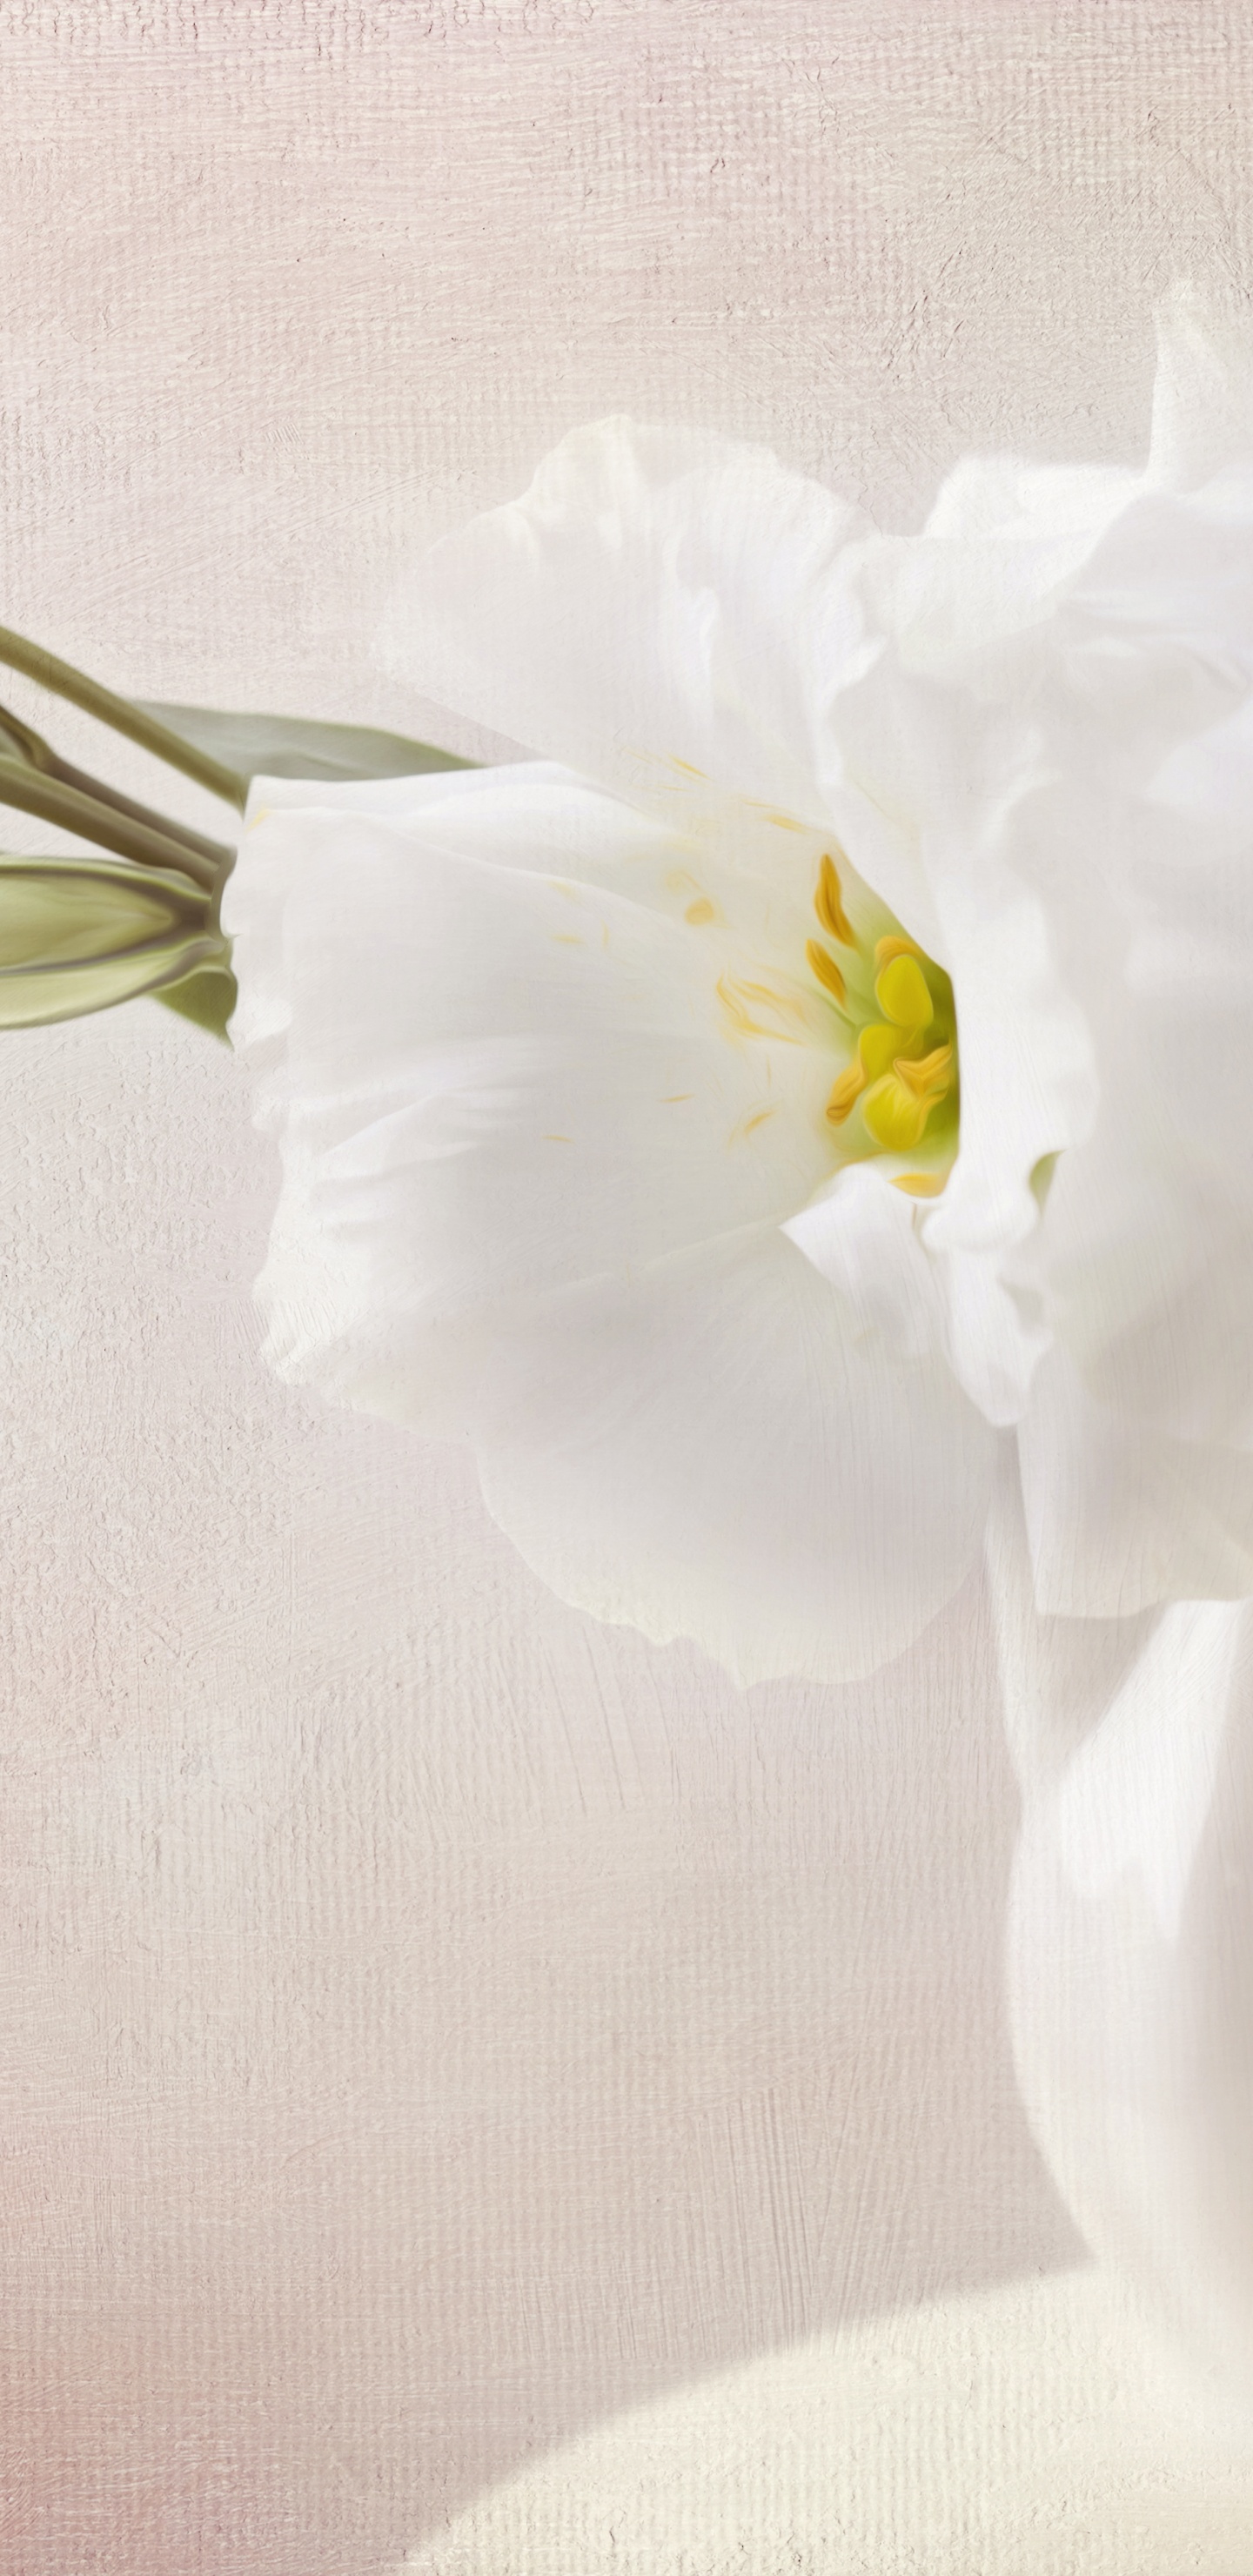 White Flower in Clear Glass Vase. Wallpaper in 1440x2960 Resolution